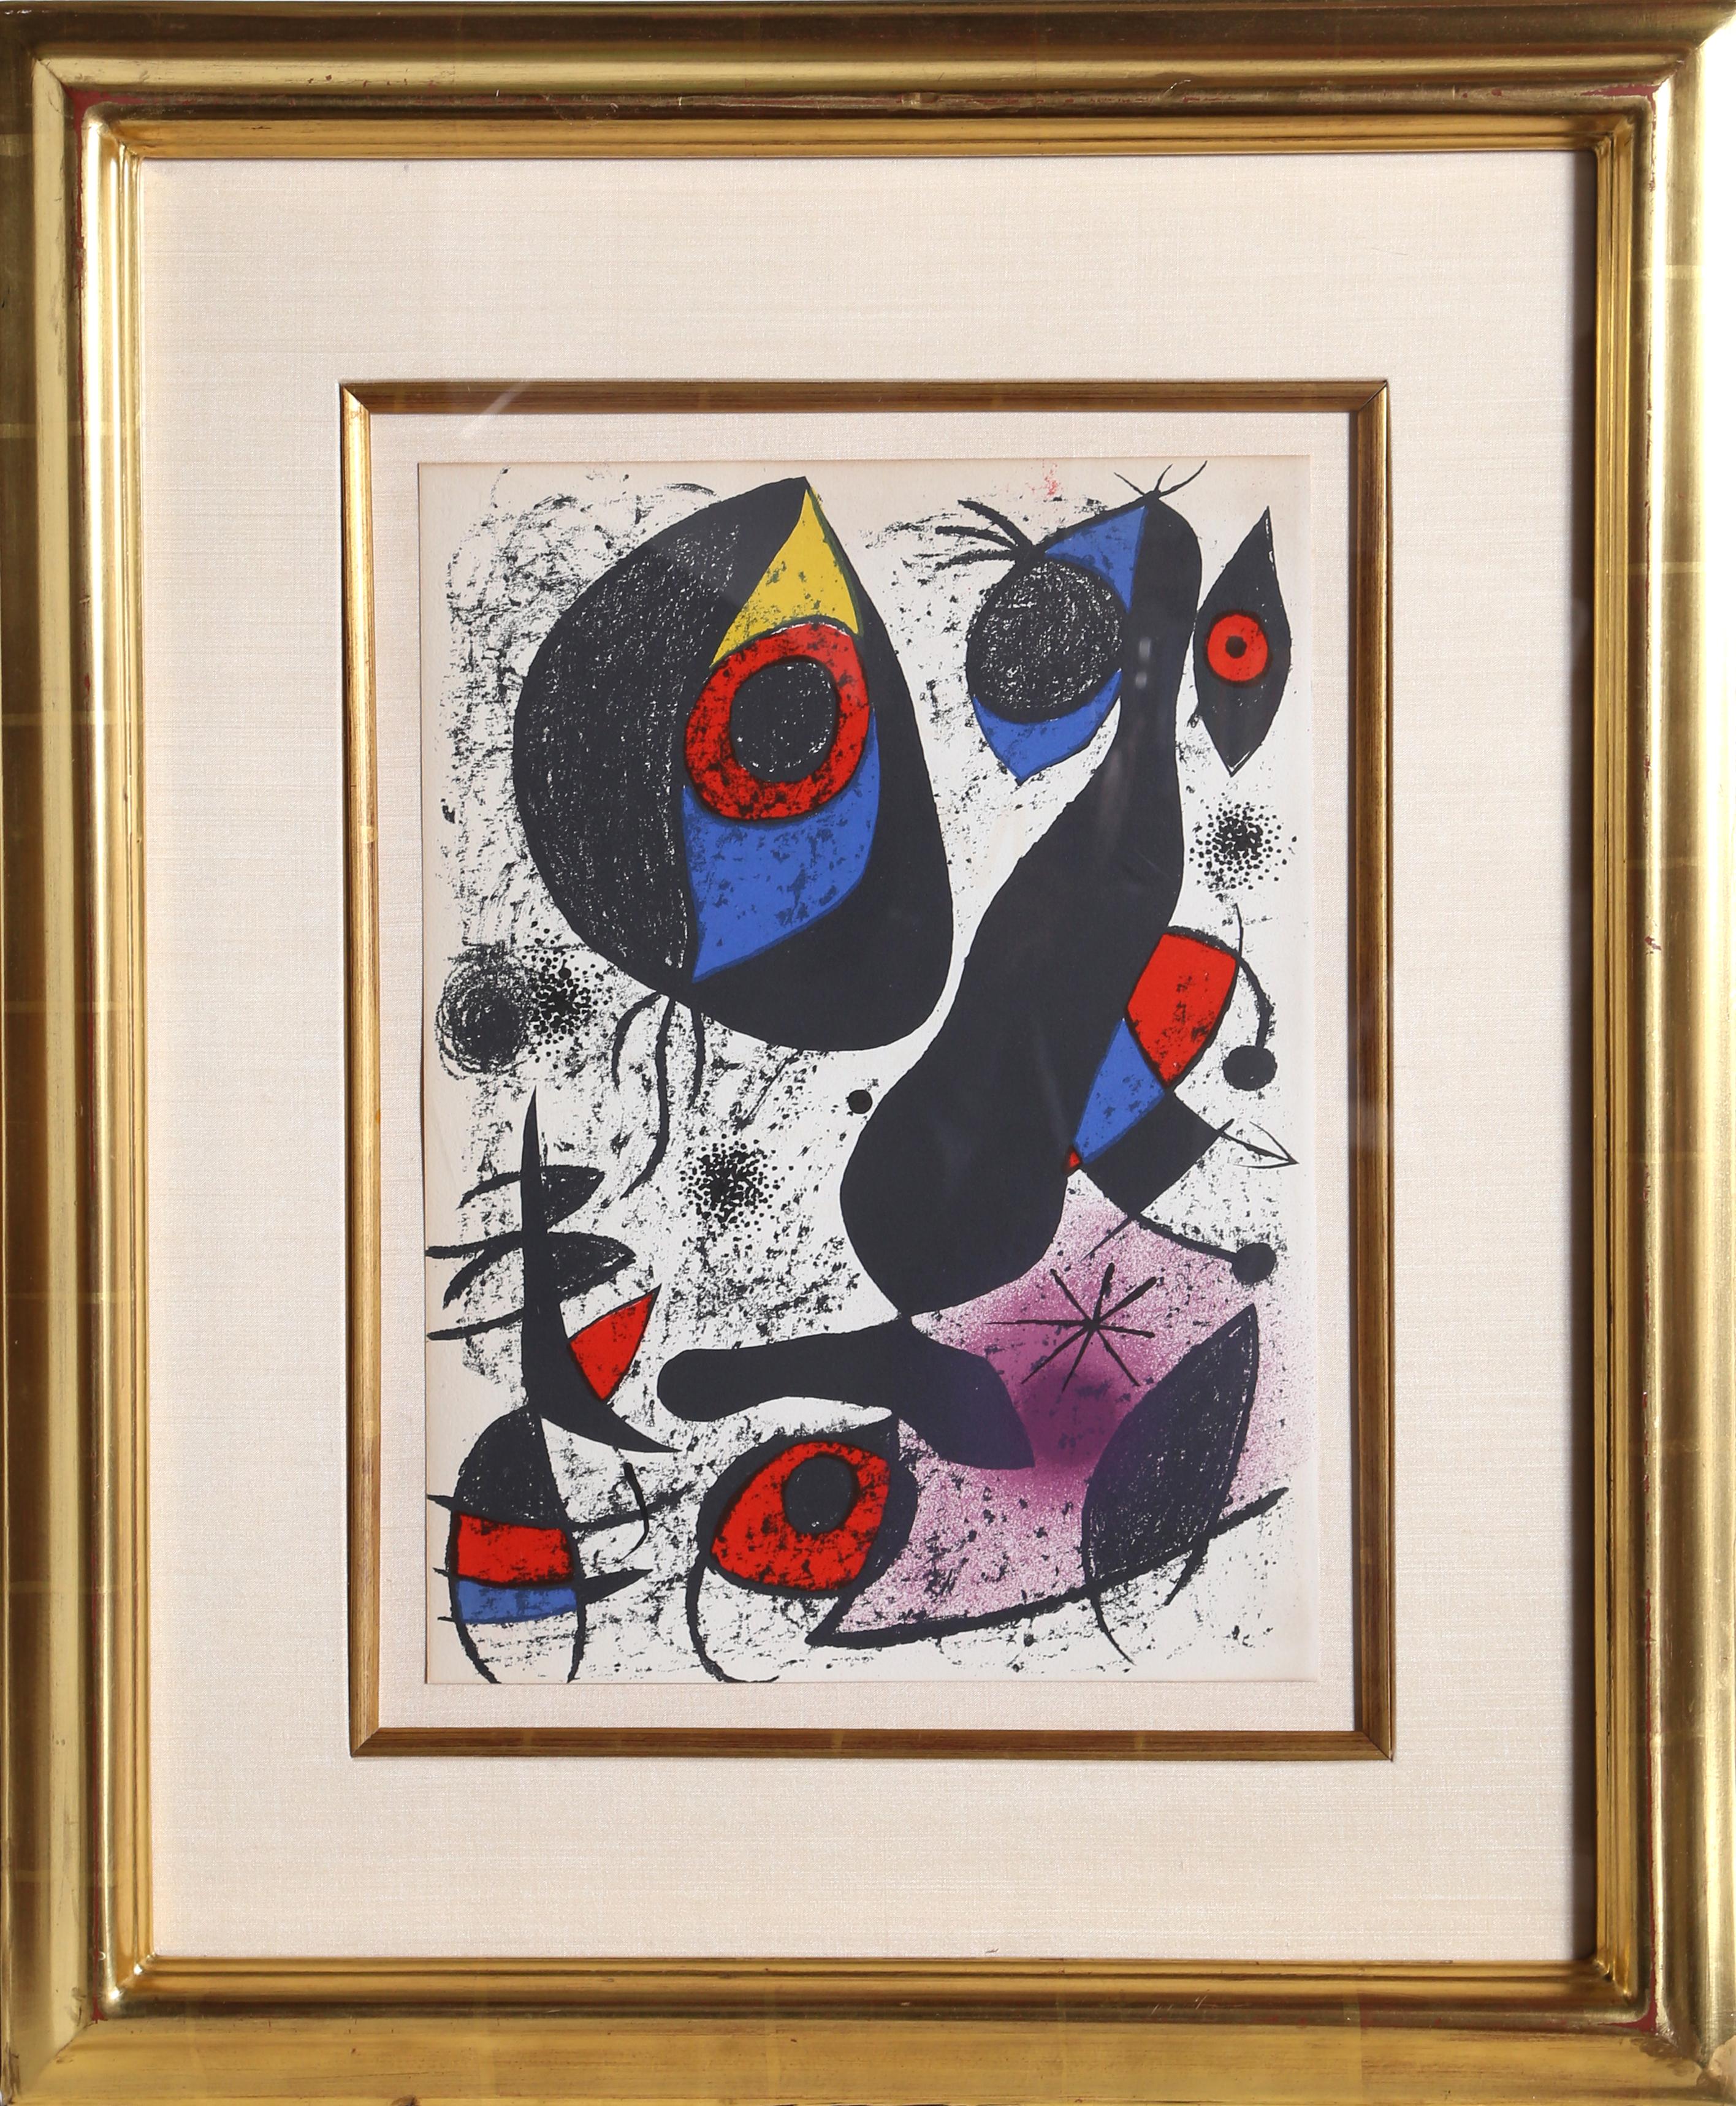 Miro a l'Encre I, Lithograph by Joan Miro 1972